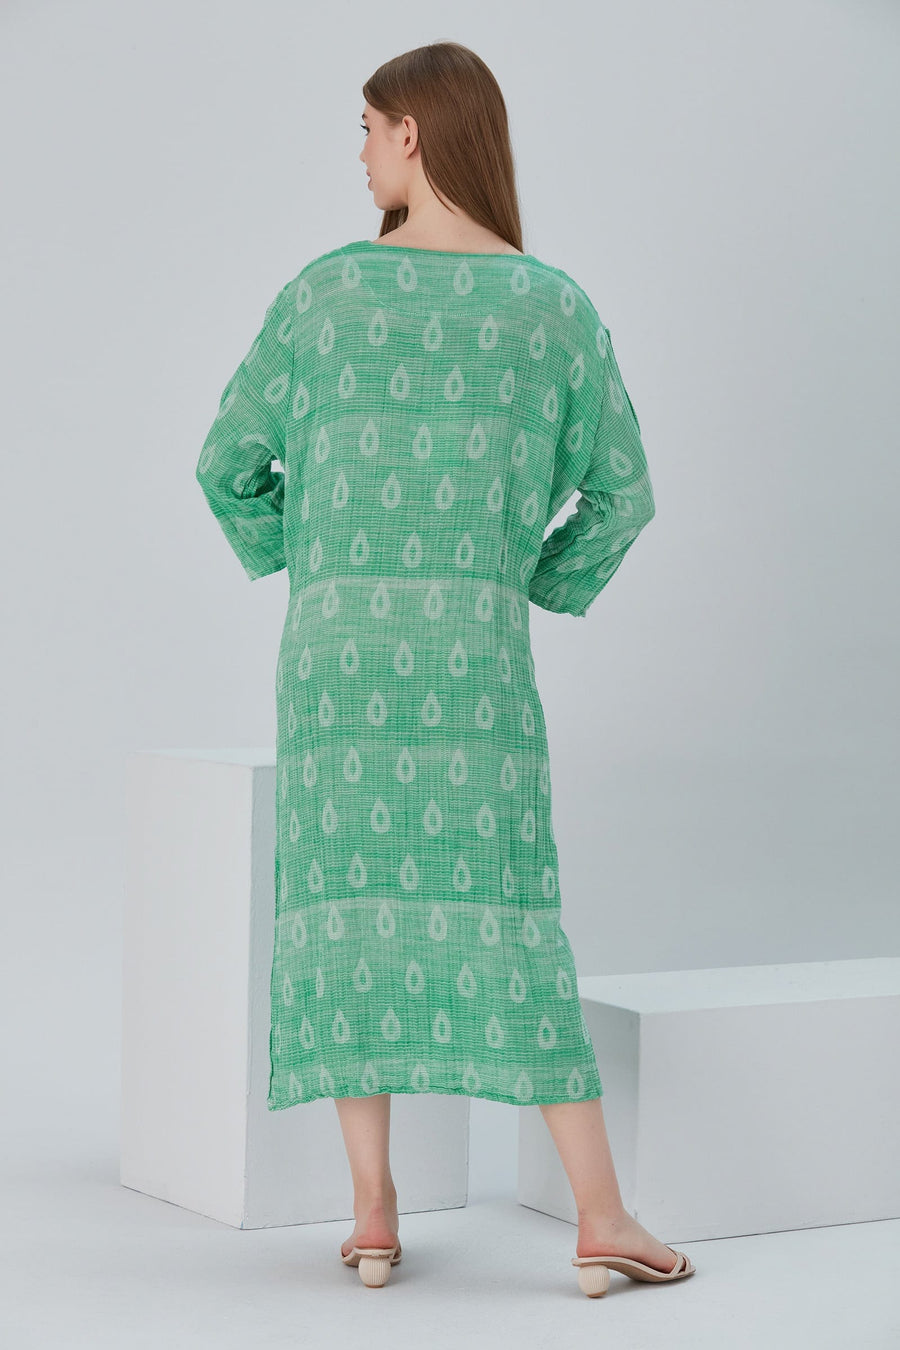 Begonville Maxi Elbise Essentials V Yaka Rahat Uzun Elbise - Yeşil